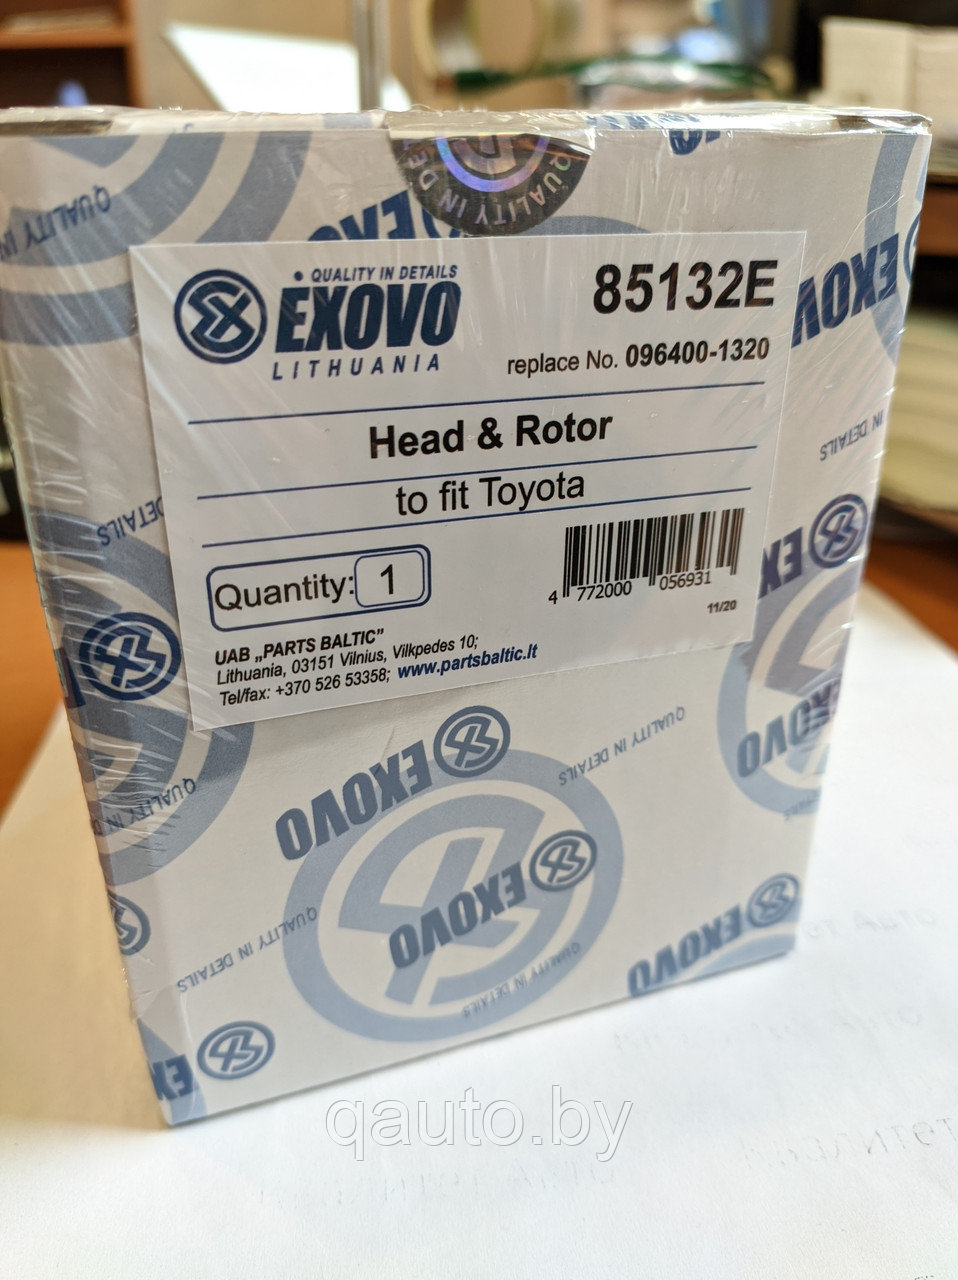 Плунжерная пара ТНВД Denso Toyota 096400-1320 EXOVO 85132E